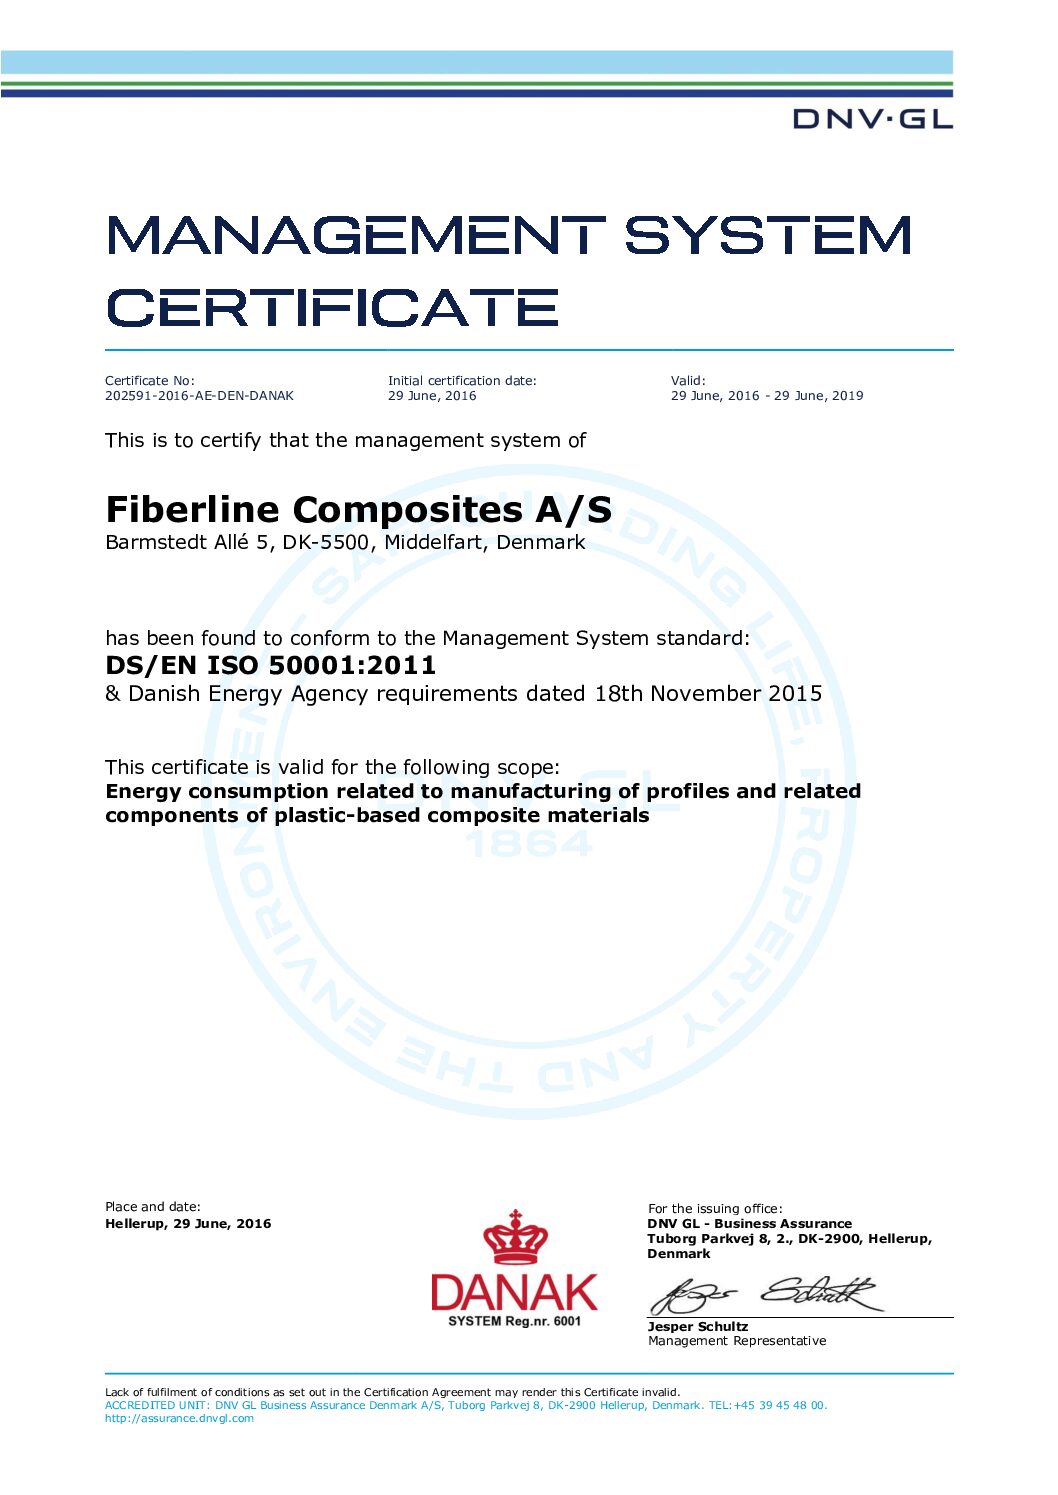 Energy Certification 2011